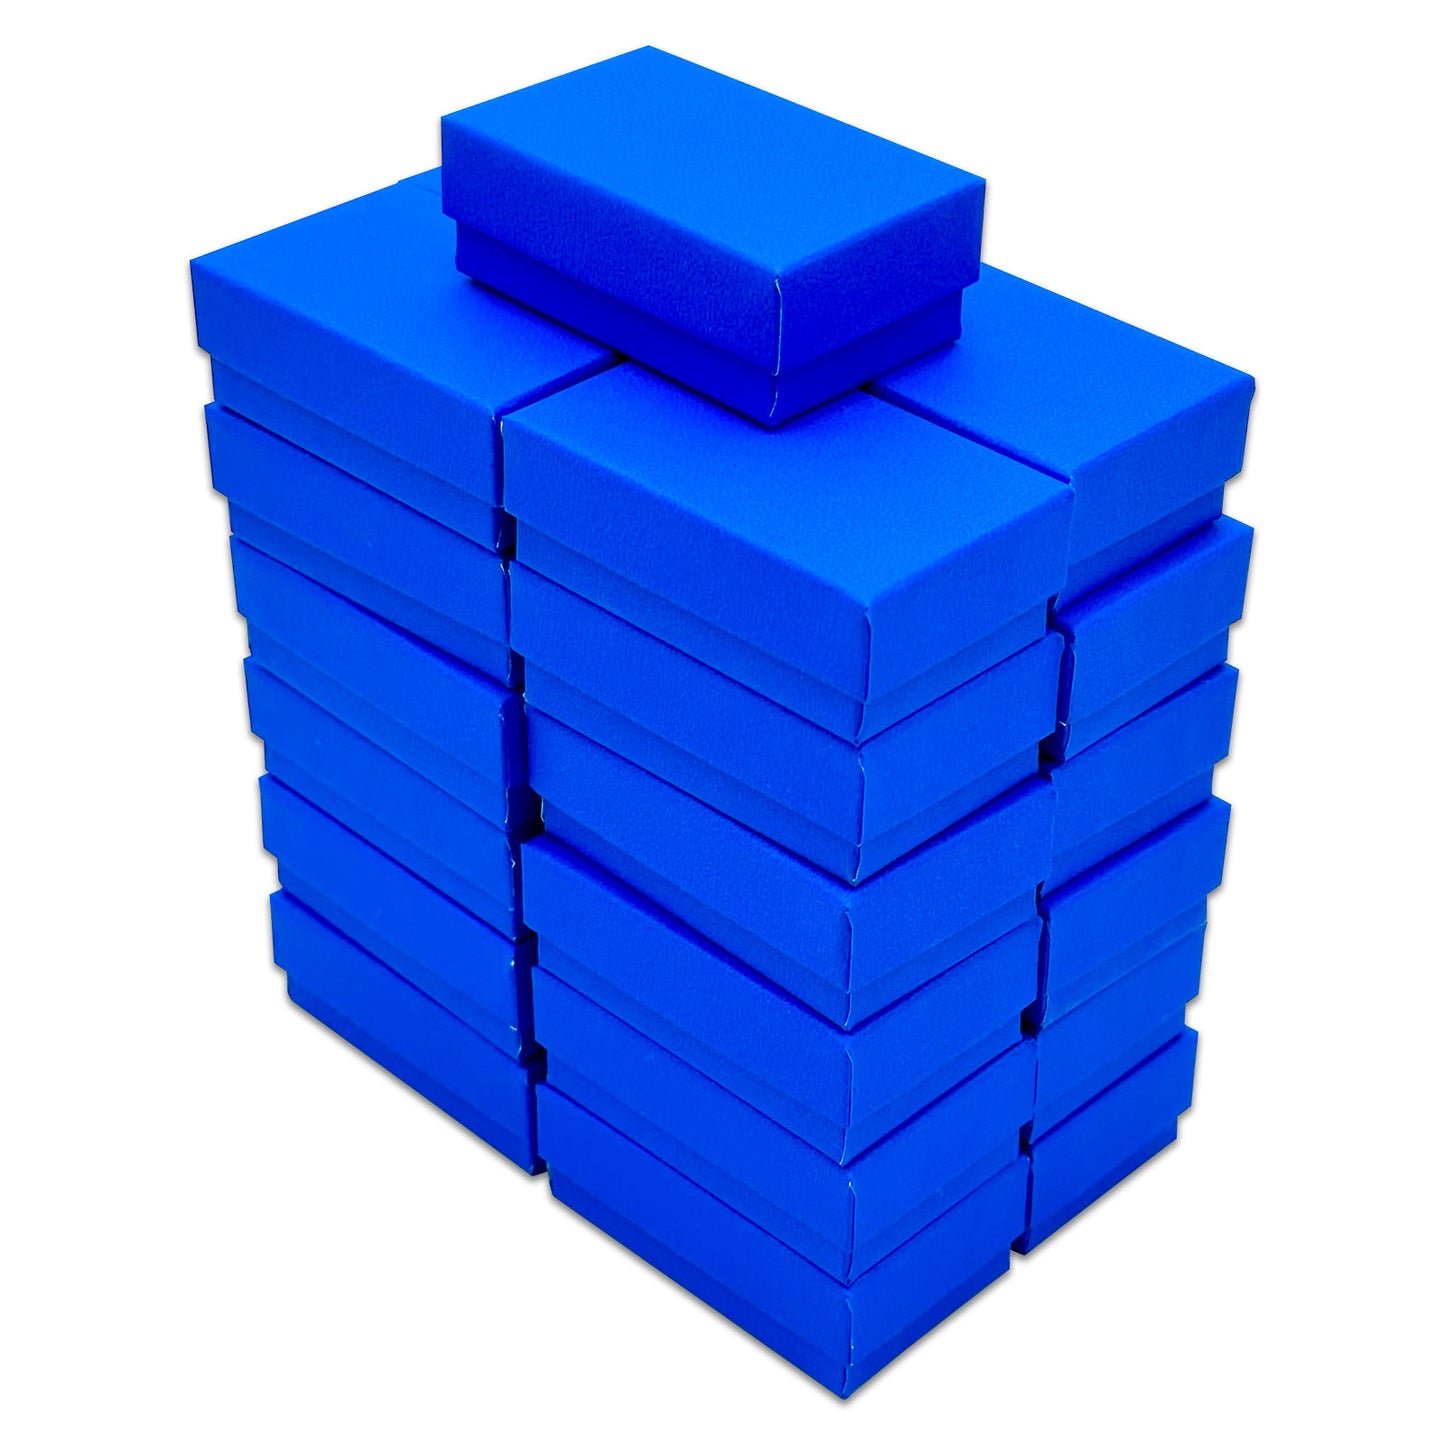 2 5/8" x 1 5/8" x 1" Neon Blue Cotton Filled Paper Box